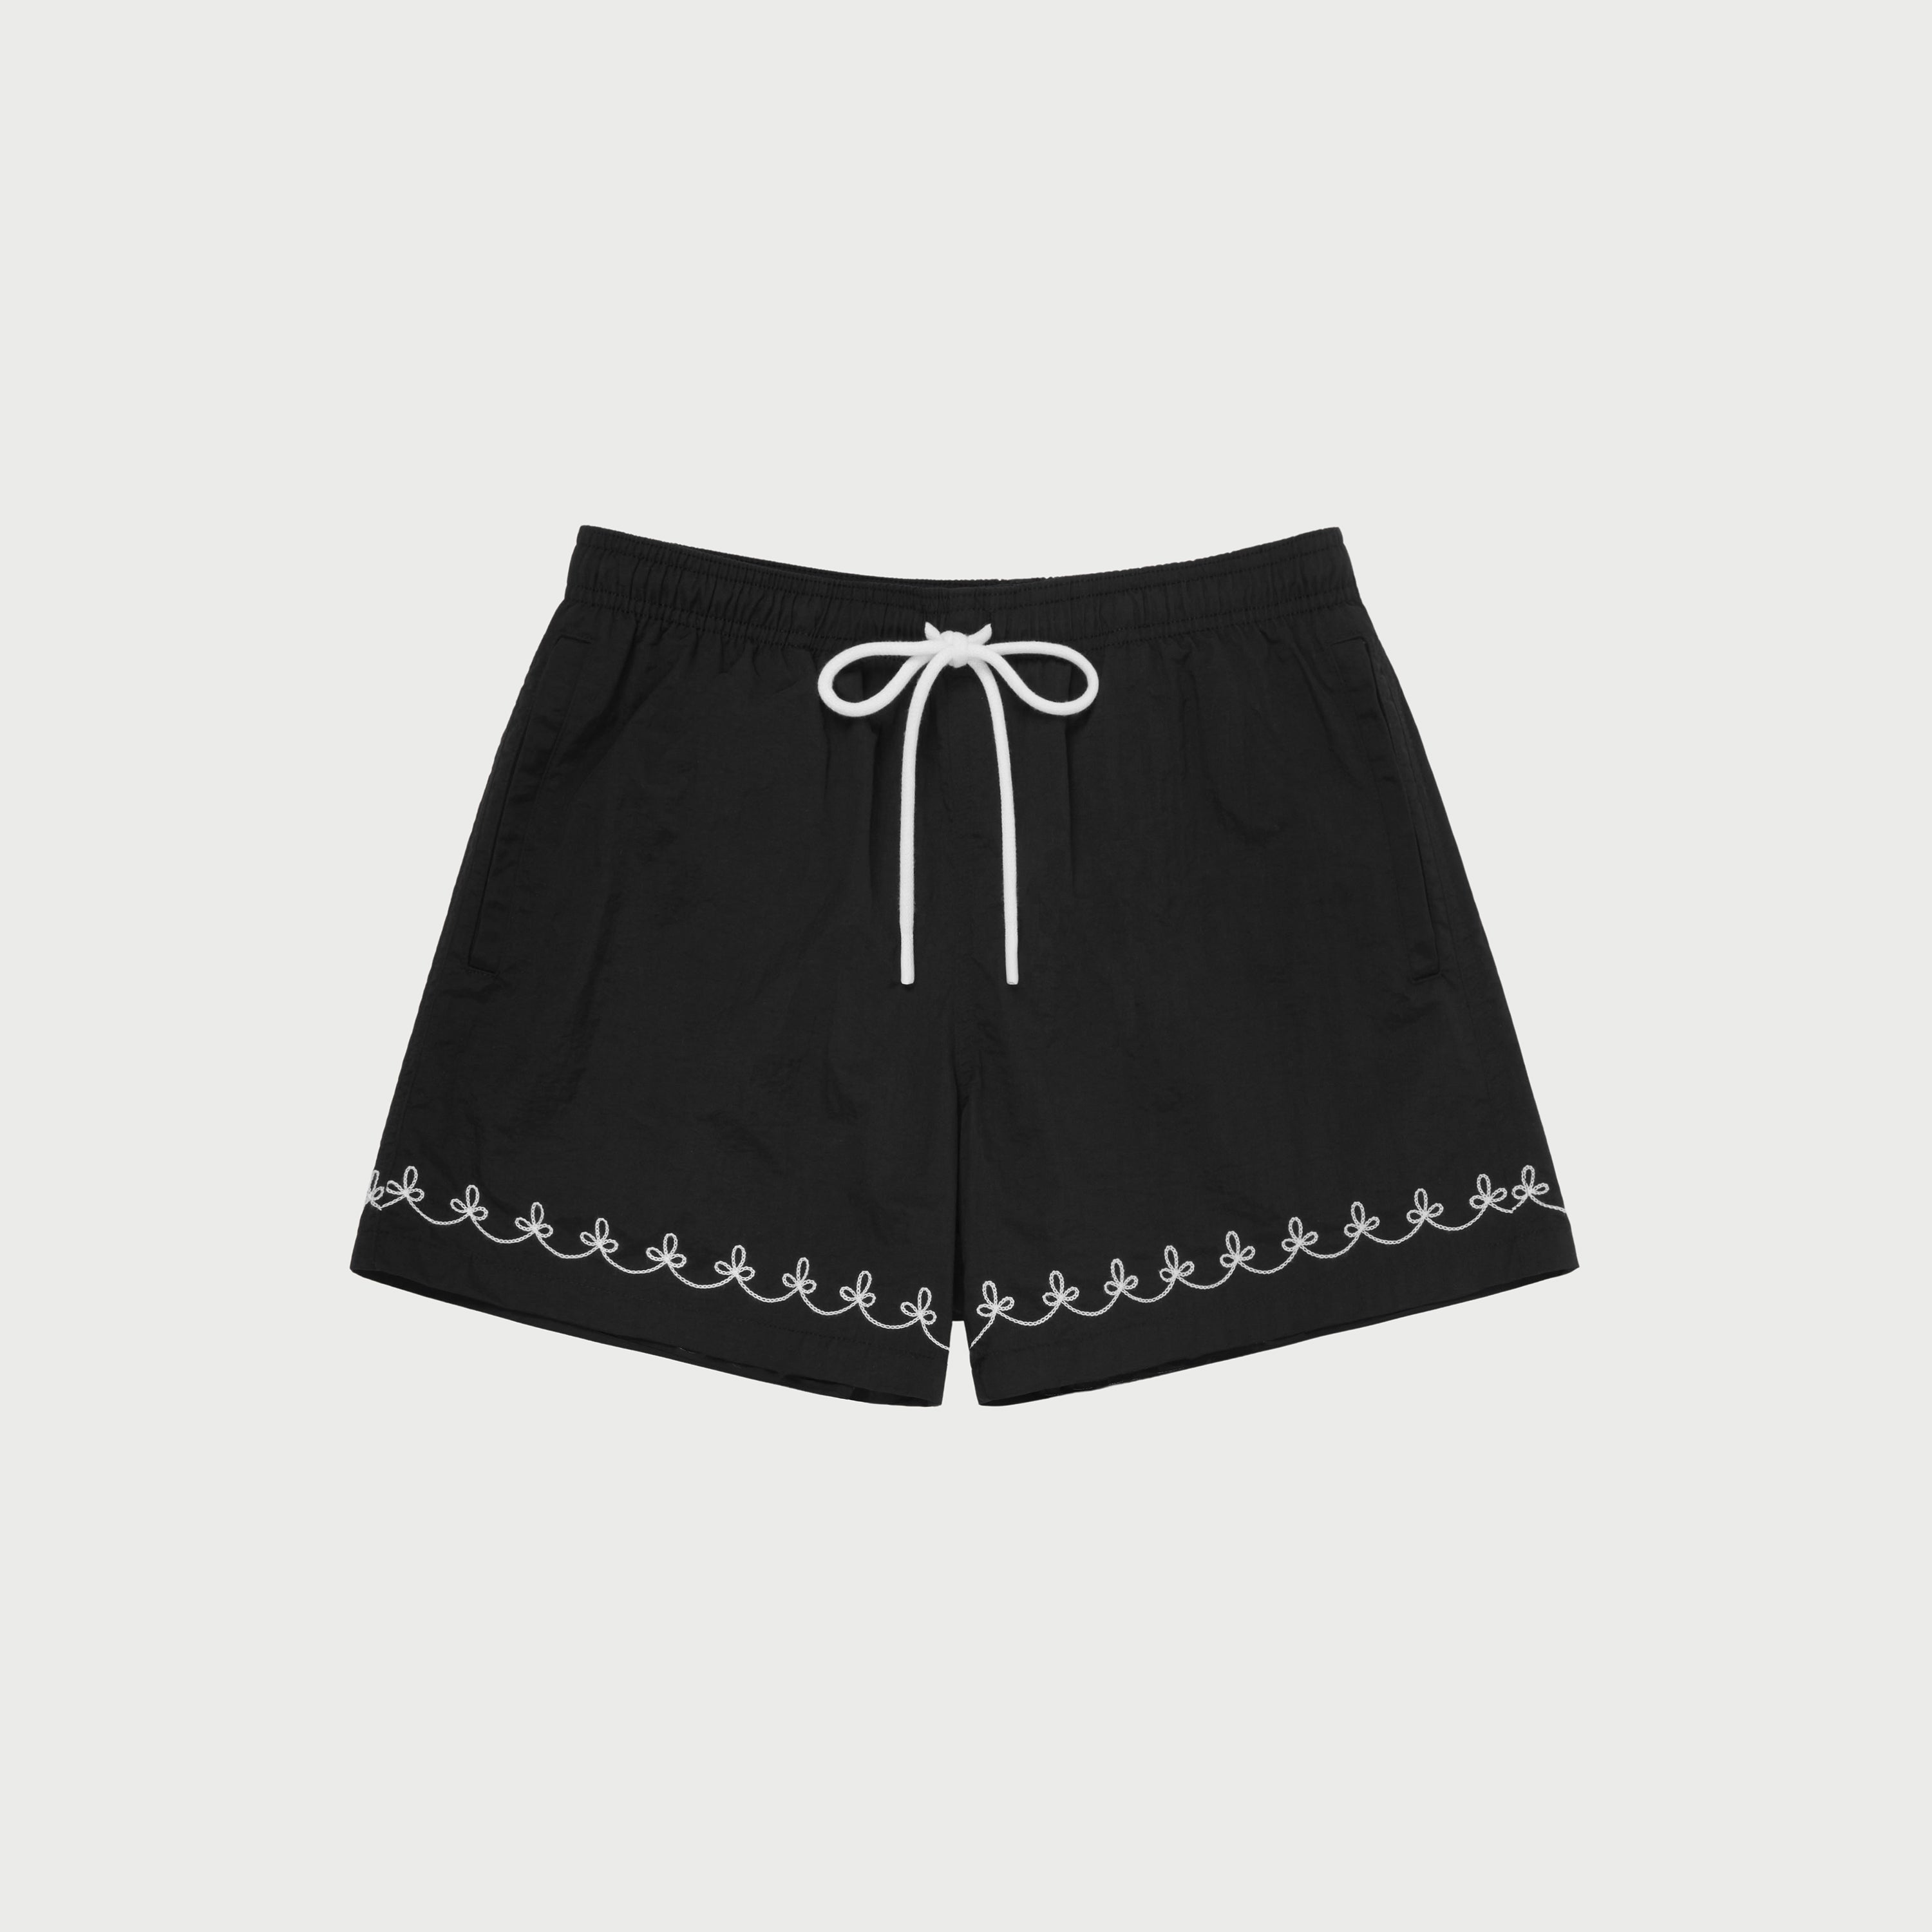 Korean Style] High Waist Black A-line Dress-up Short – Ordicle